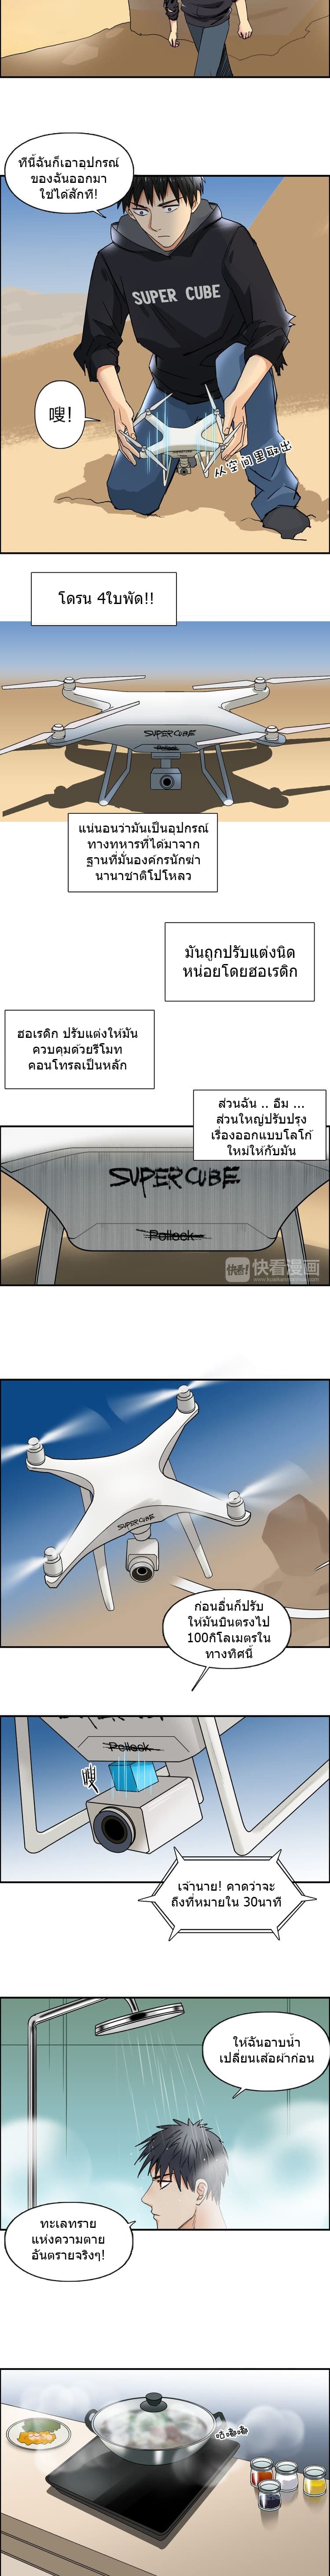 Super Cube89 (9)